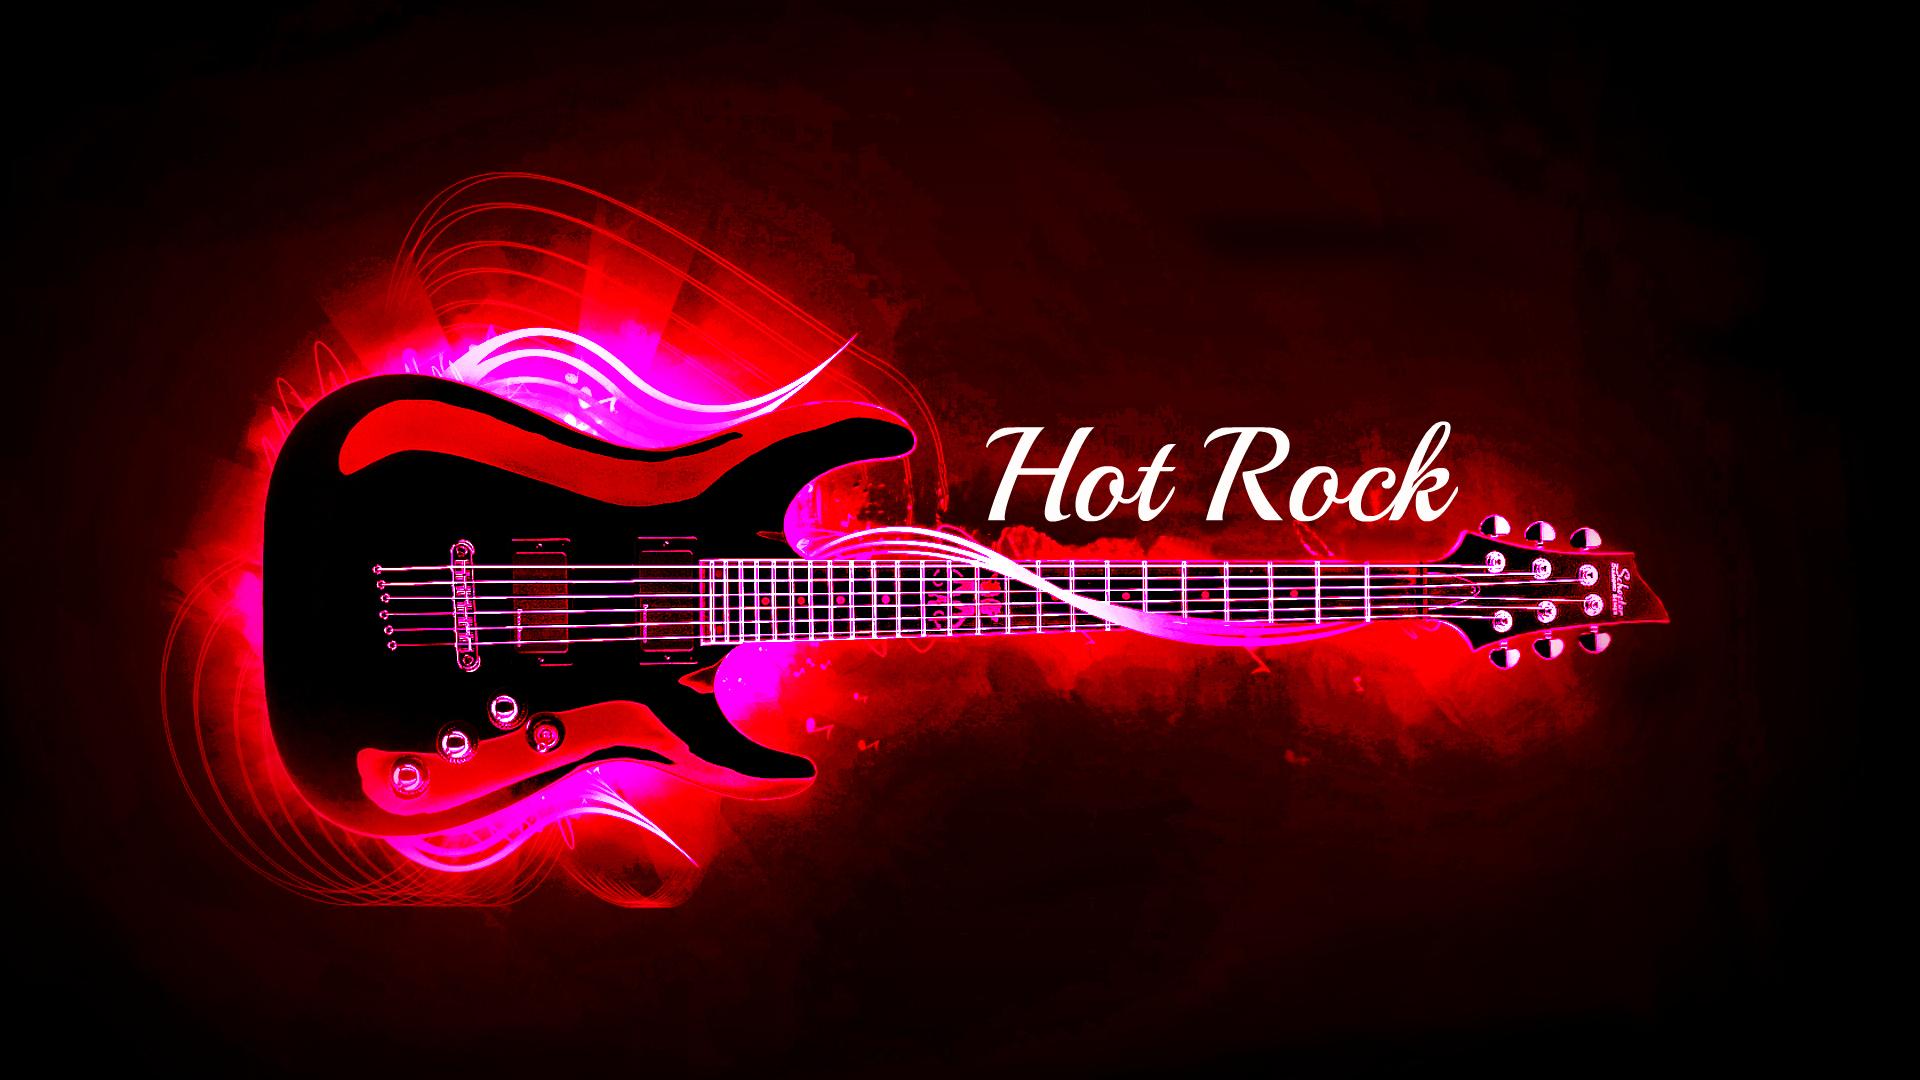 High Resolution Rock Guitar Wallpaper Full Size - SiWallpaperHD 18112